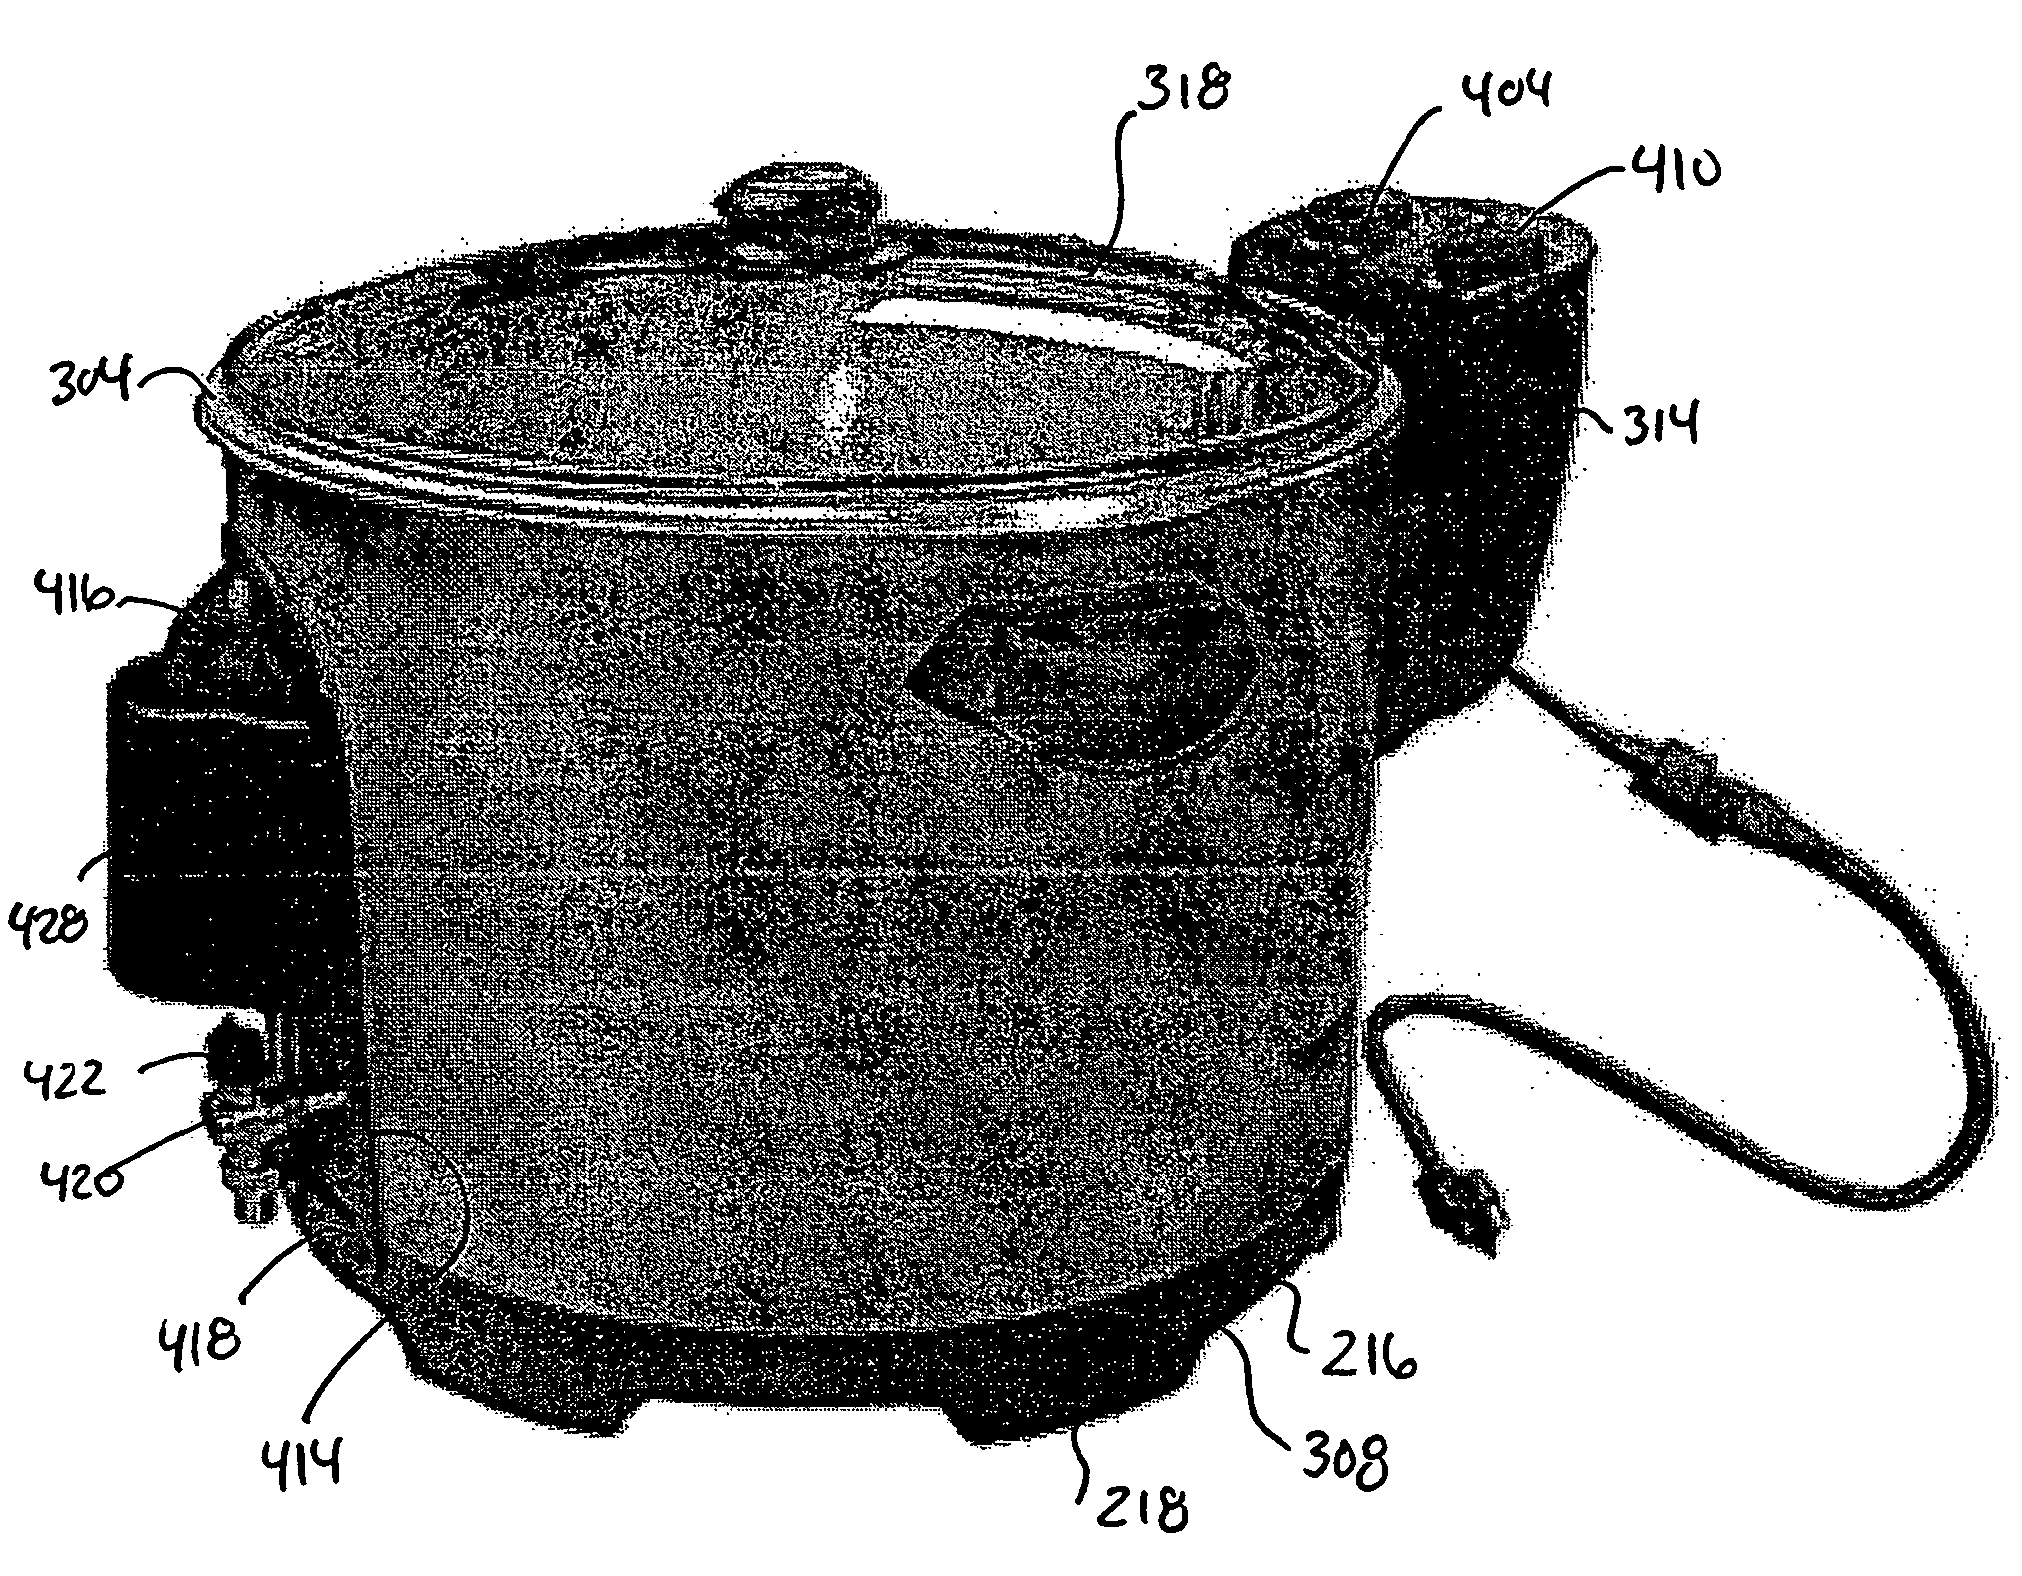 Cooking apparatus